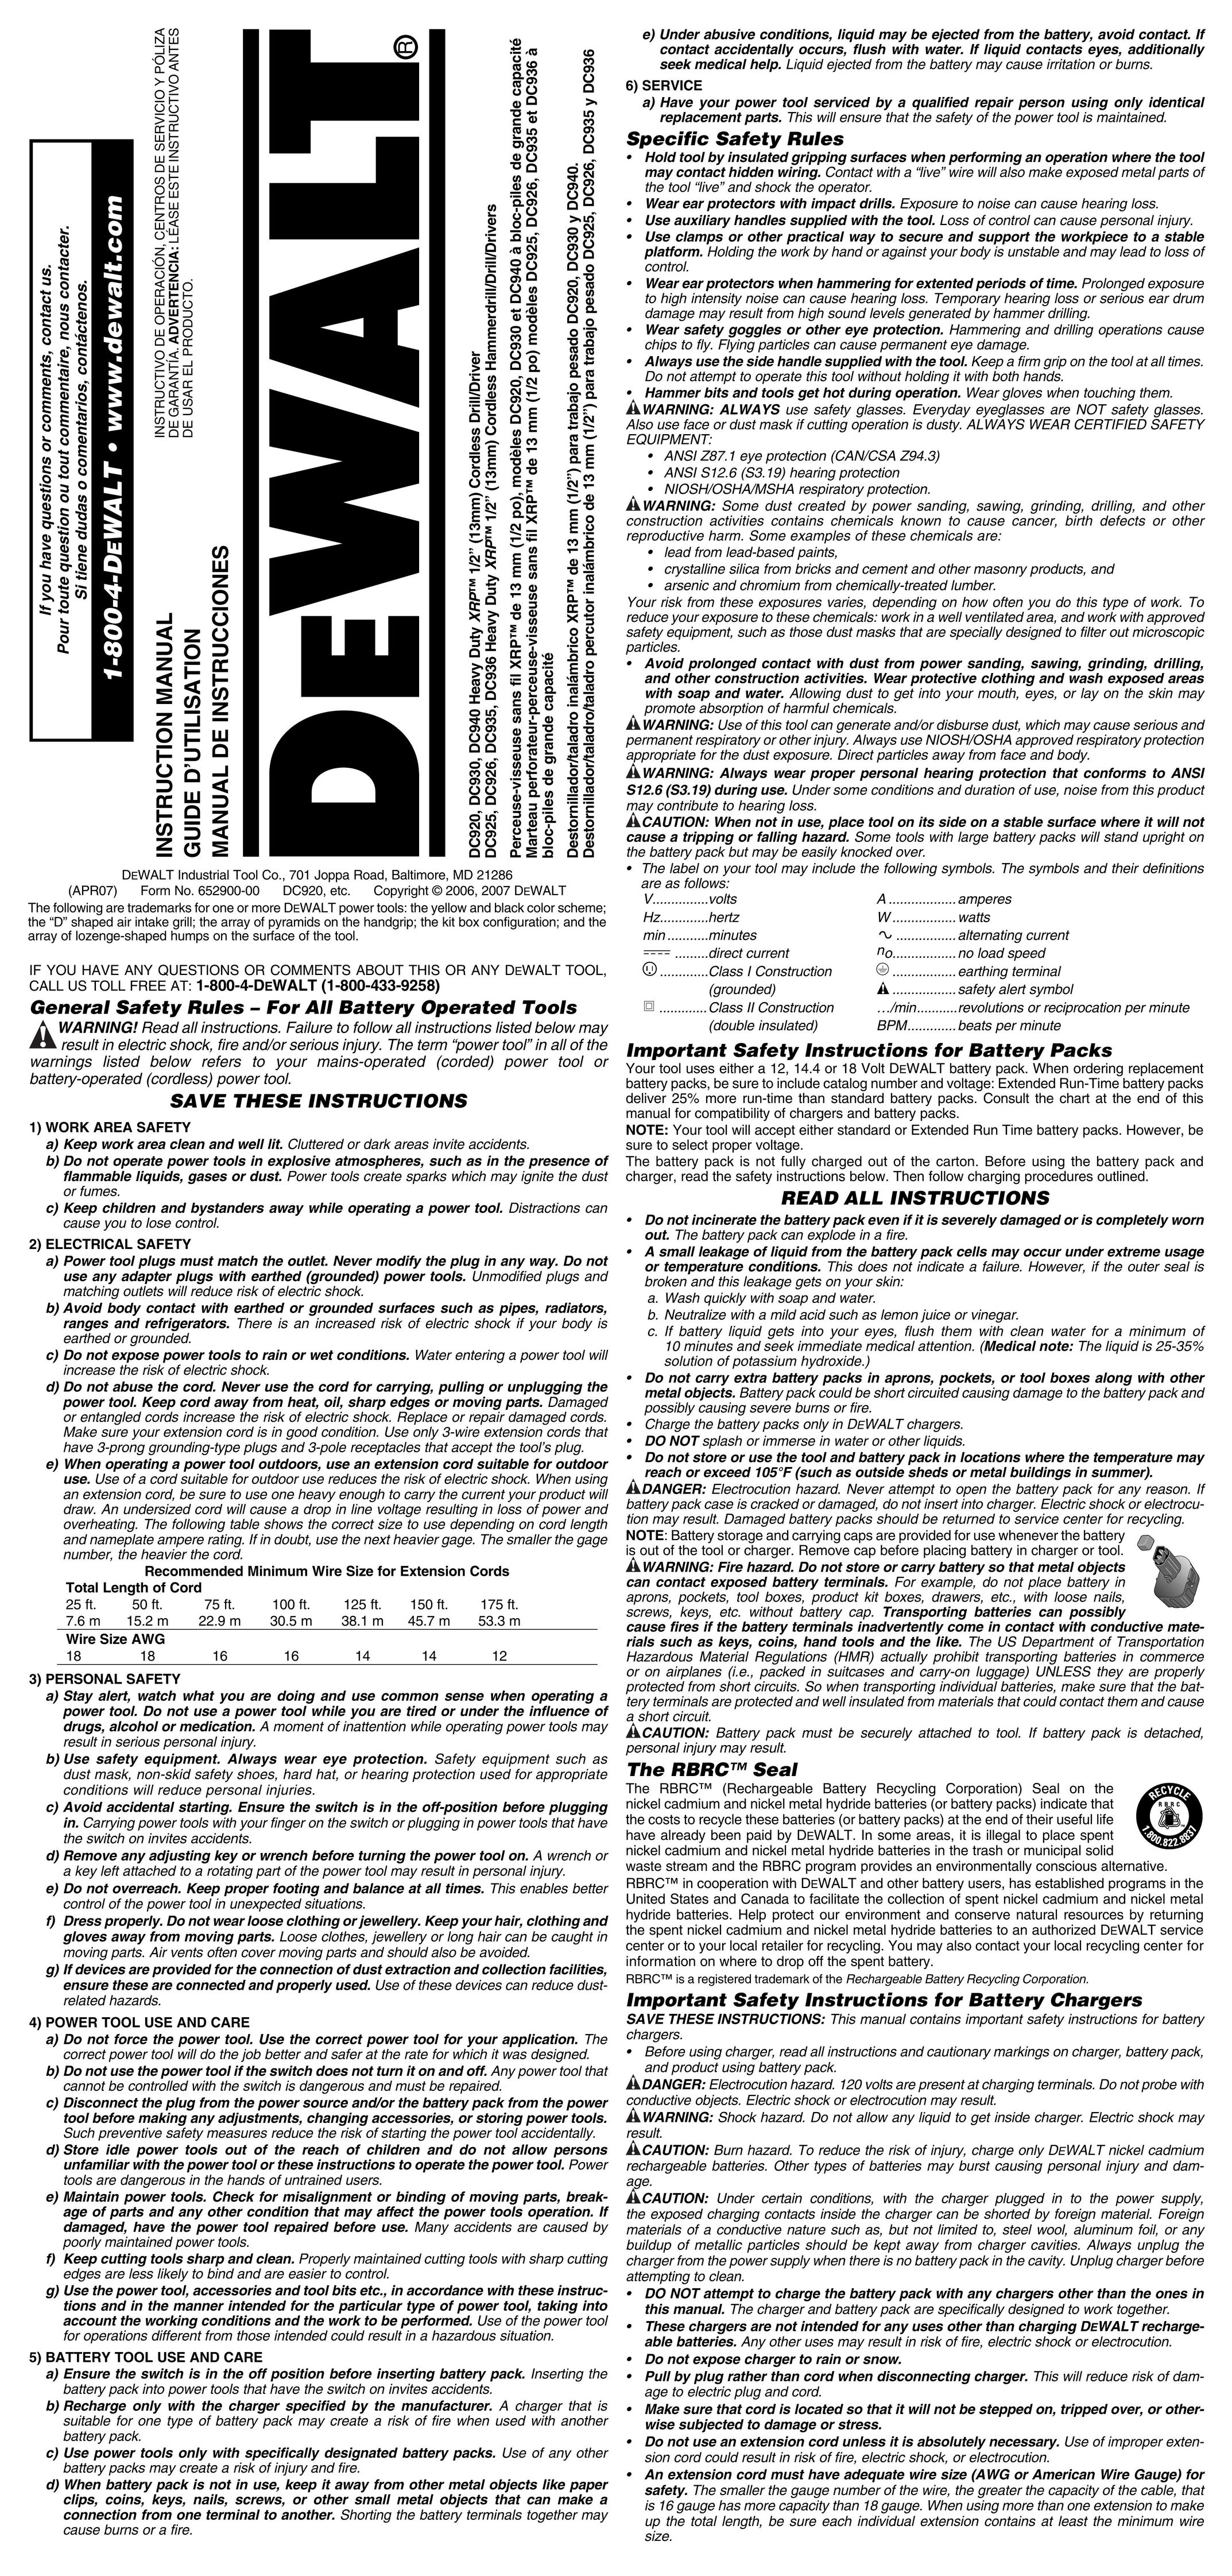 DeWalt DC925 Cordless Drill User Manual